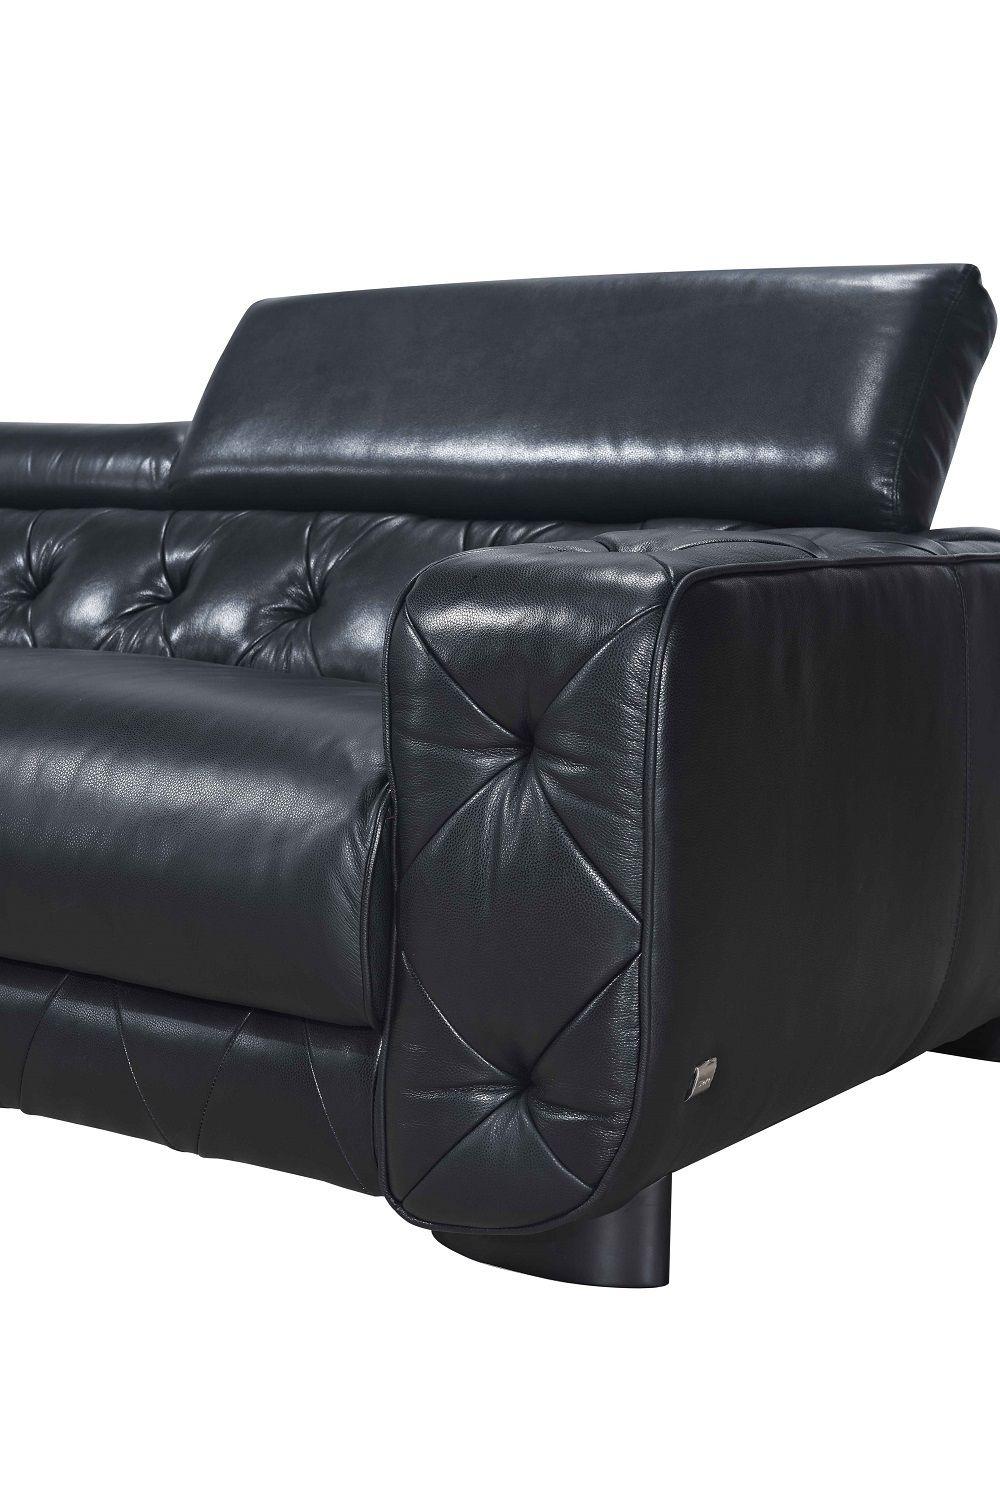 

                    
J&M Furniture Hilton Sectional Sofa Black Leather Purchase 
